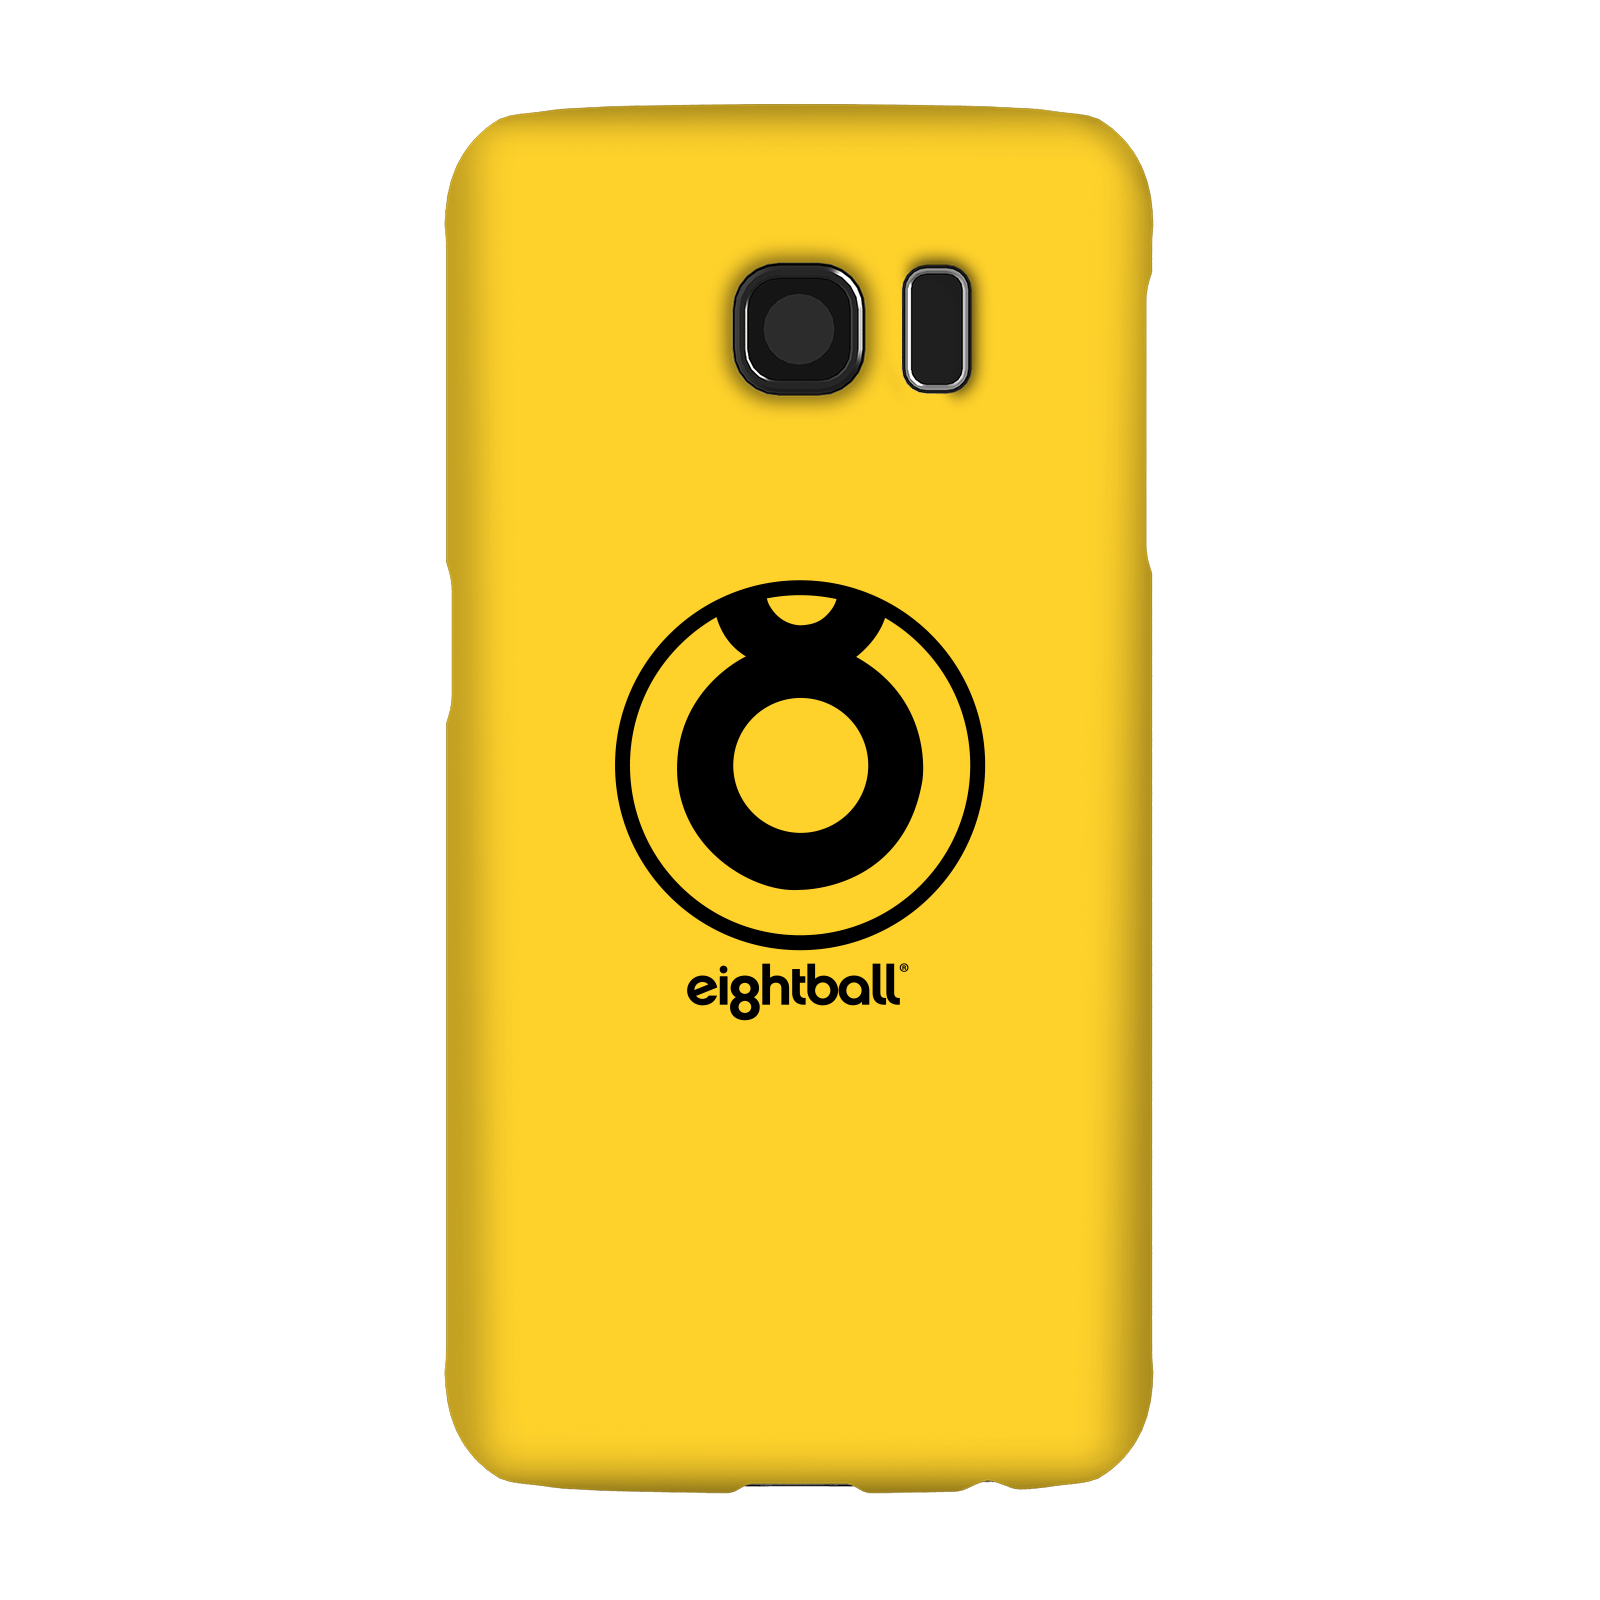 Funda Móvil Ei8htball Large Circle Logo para iPhone y Android - Samsung S6 - Carcasa rígida - Brillante